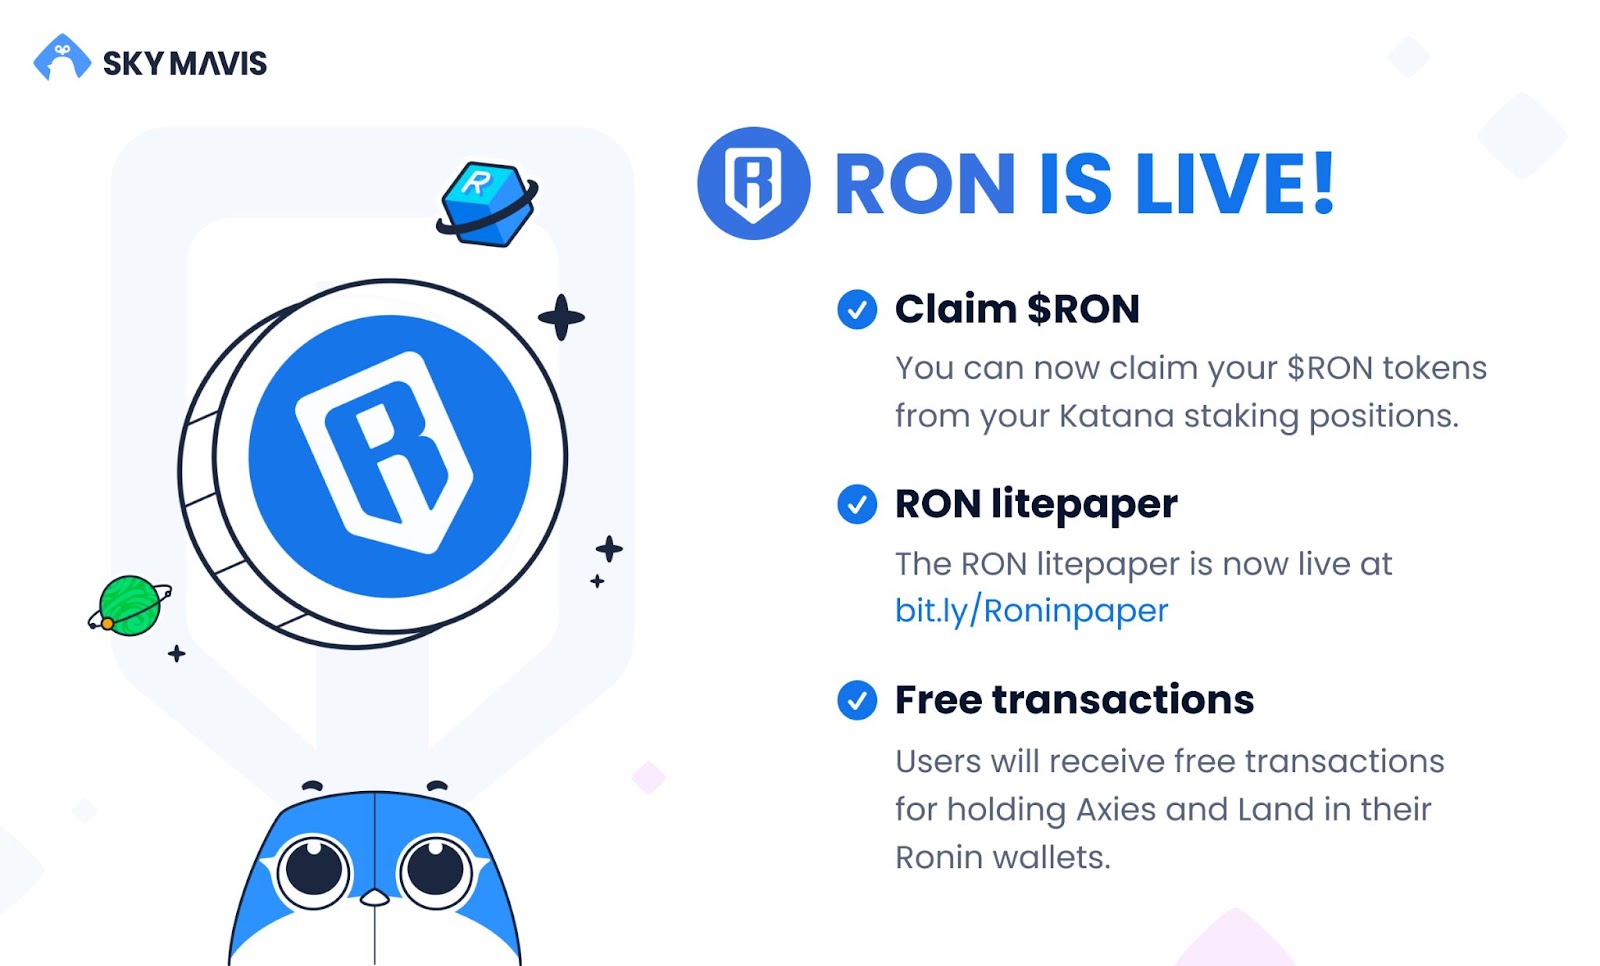 Ron token is live